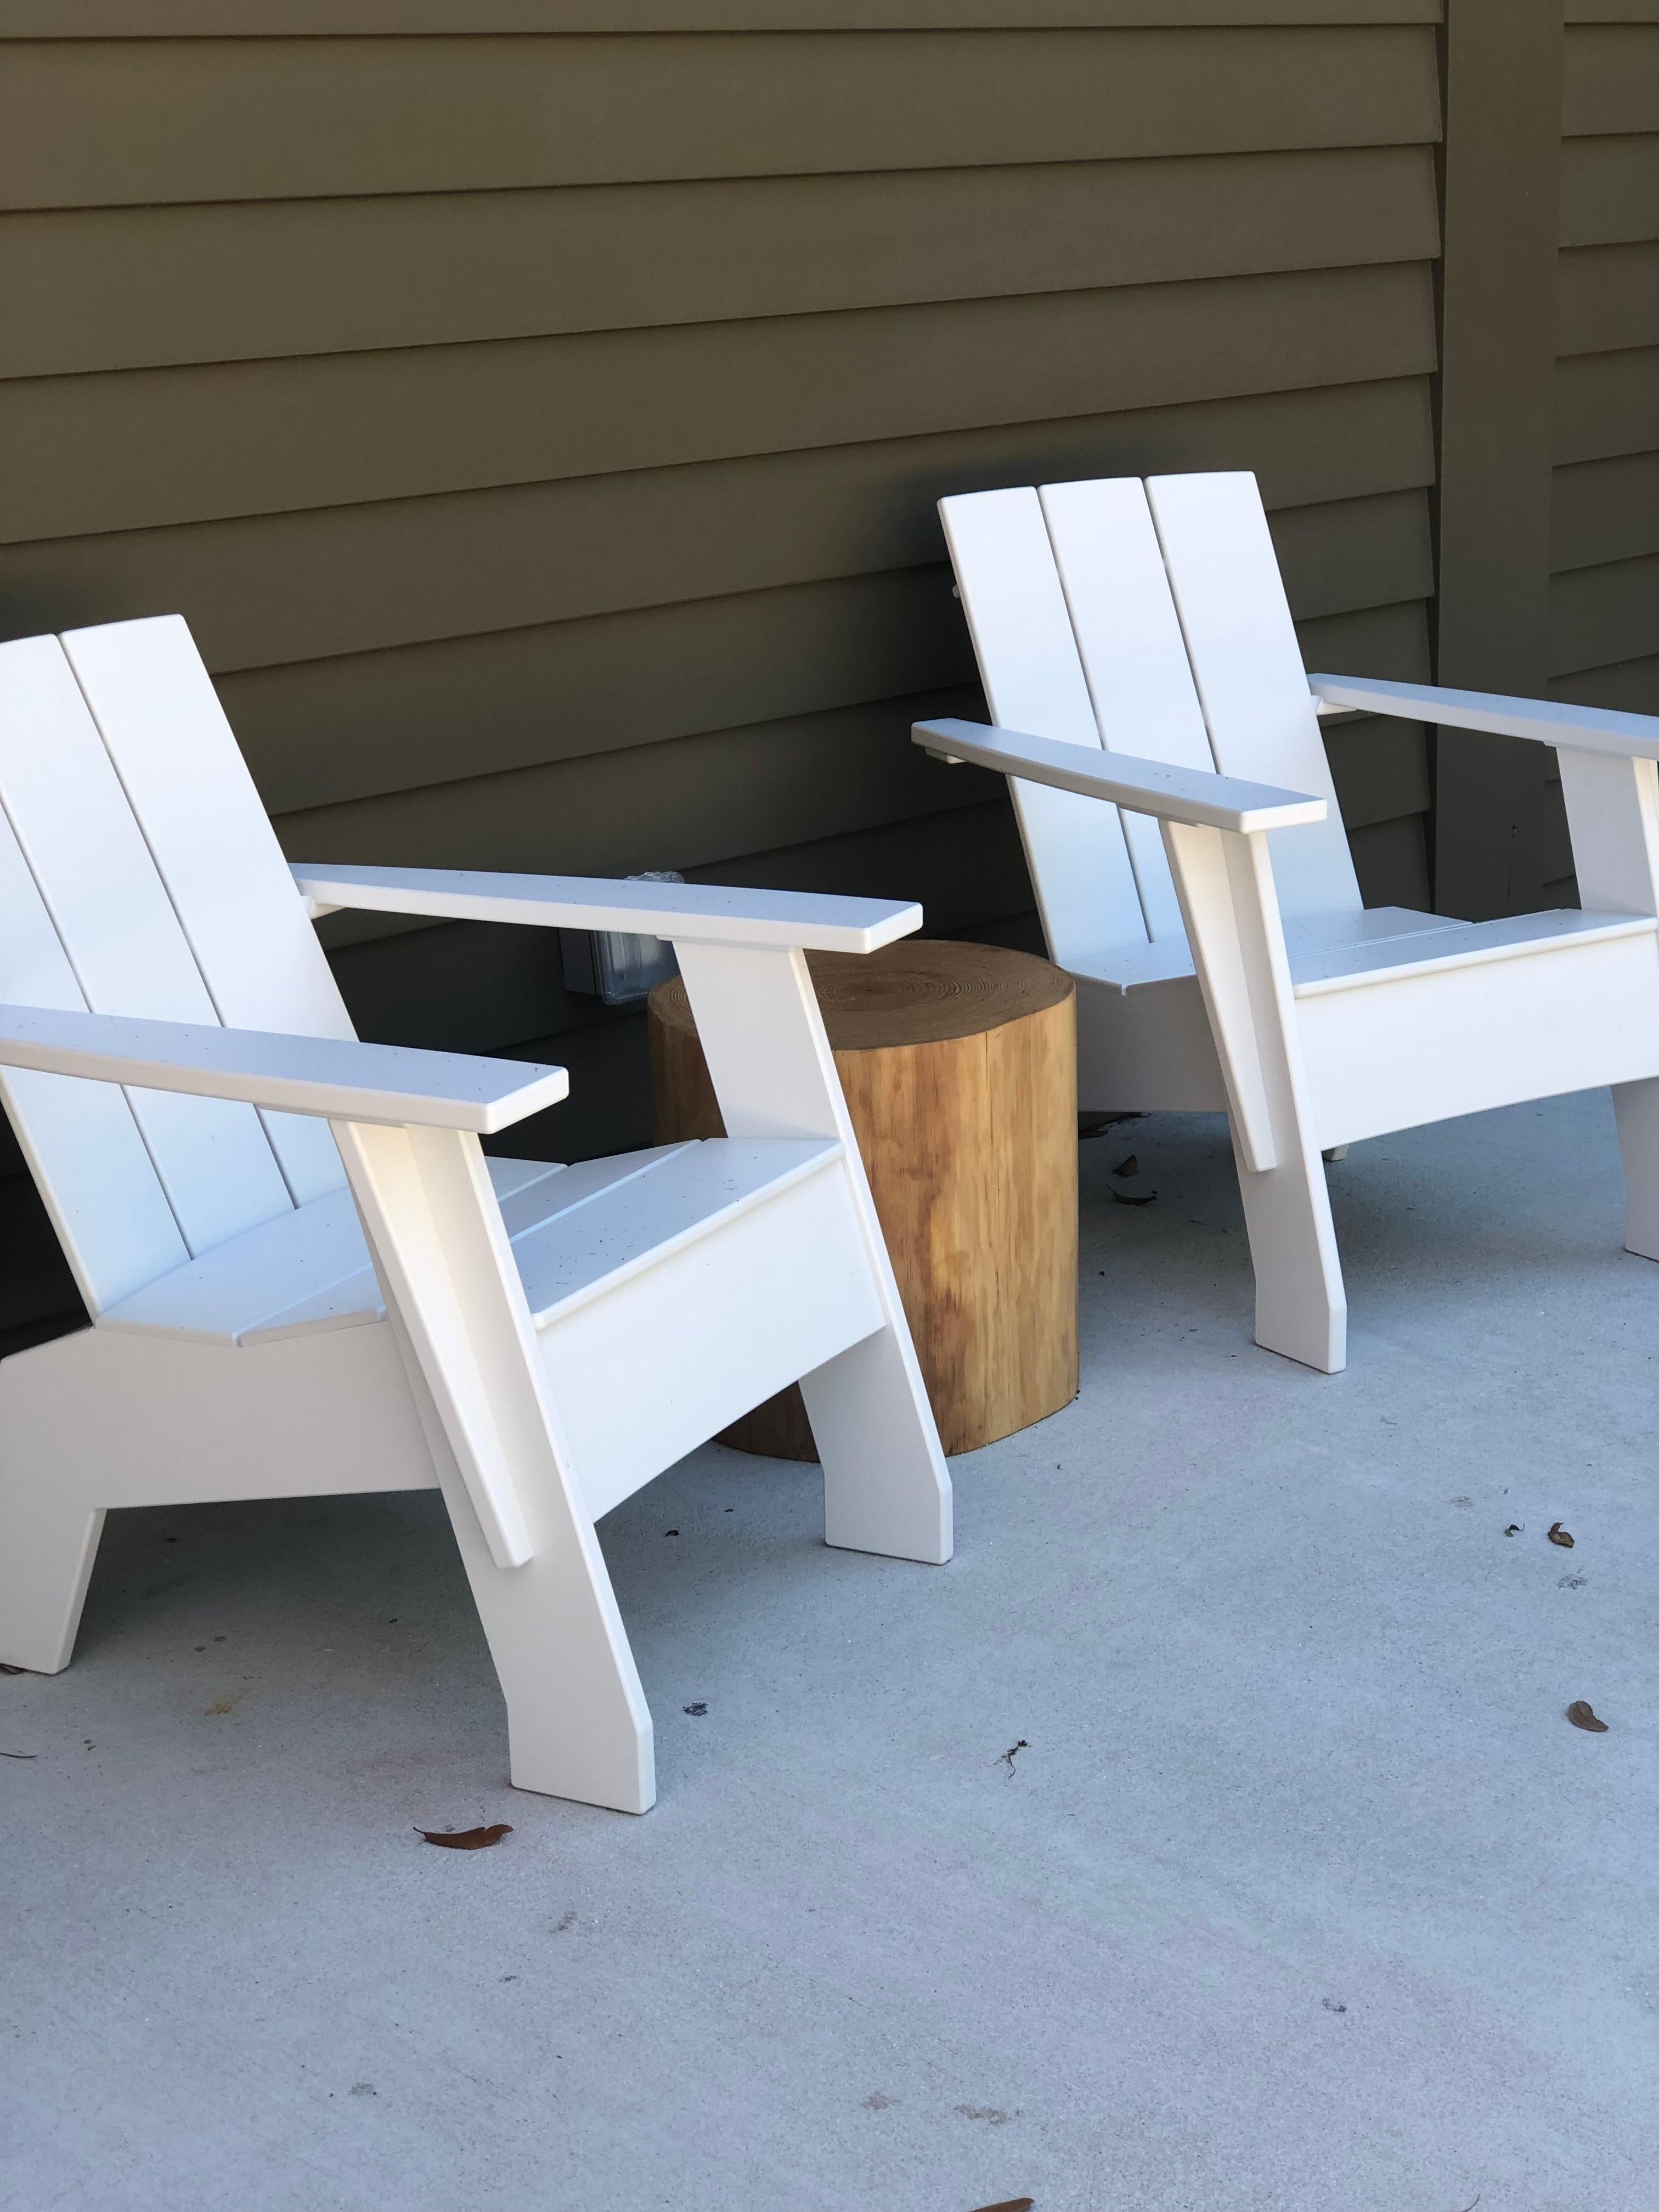 American Craftsman Rustic Wooden Stump Side Table